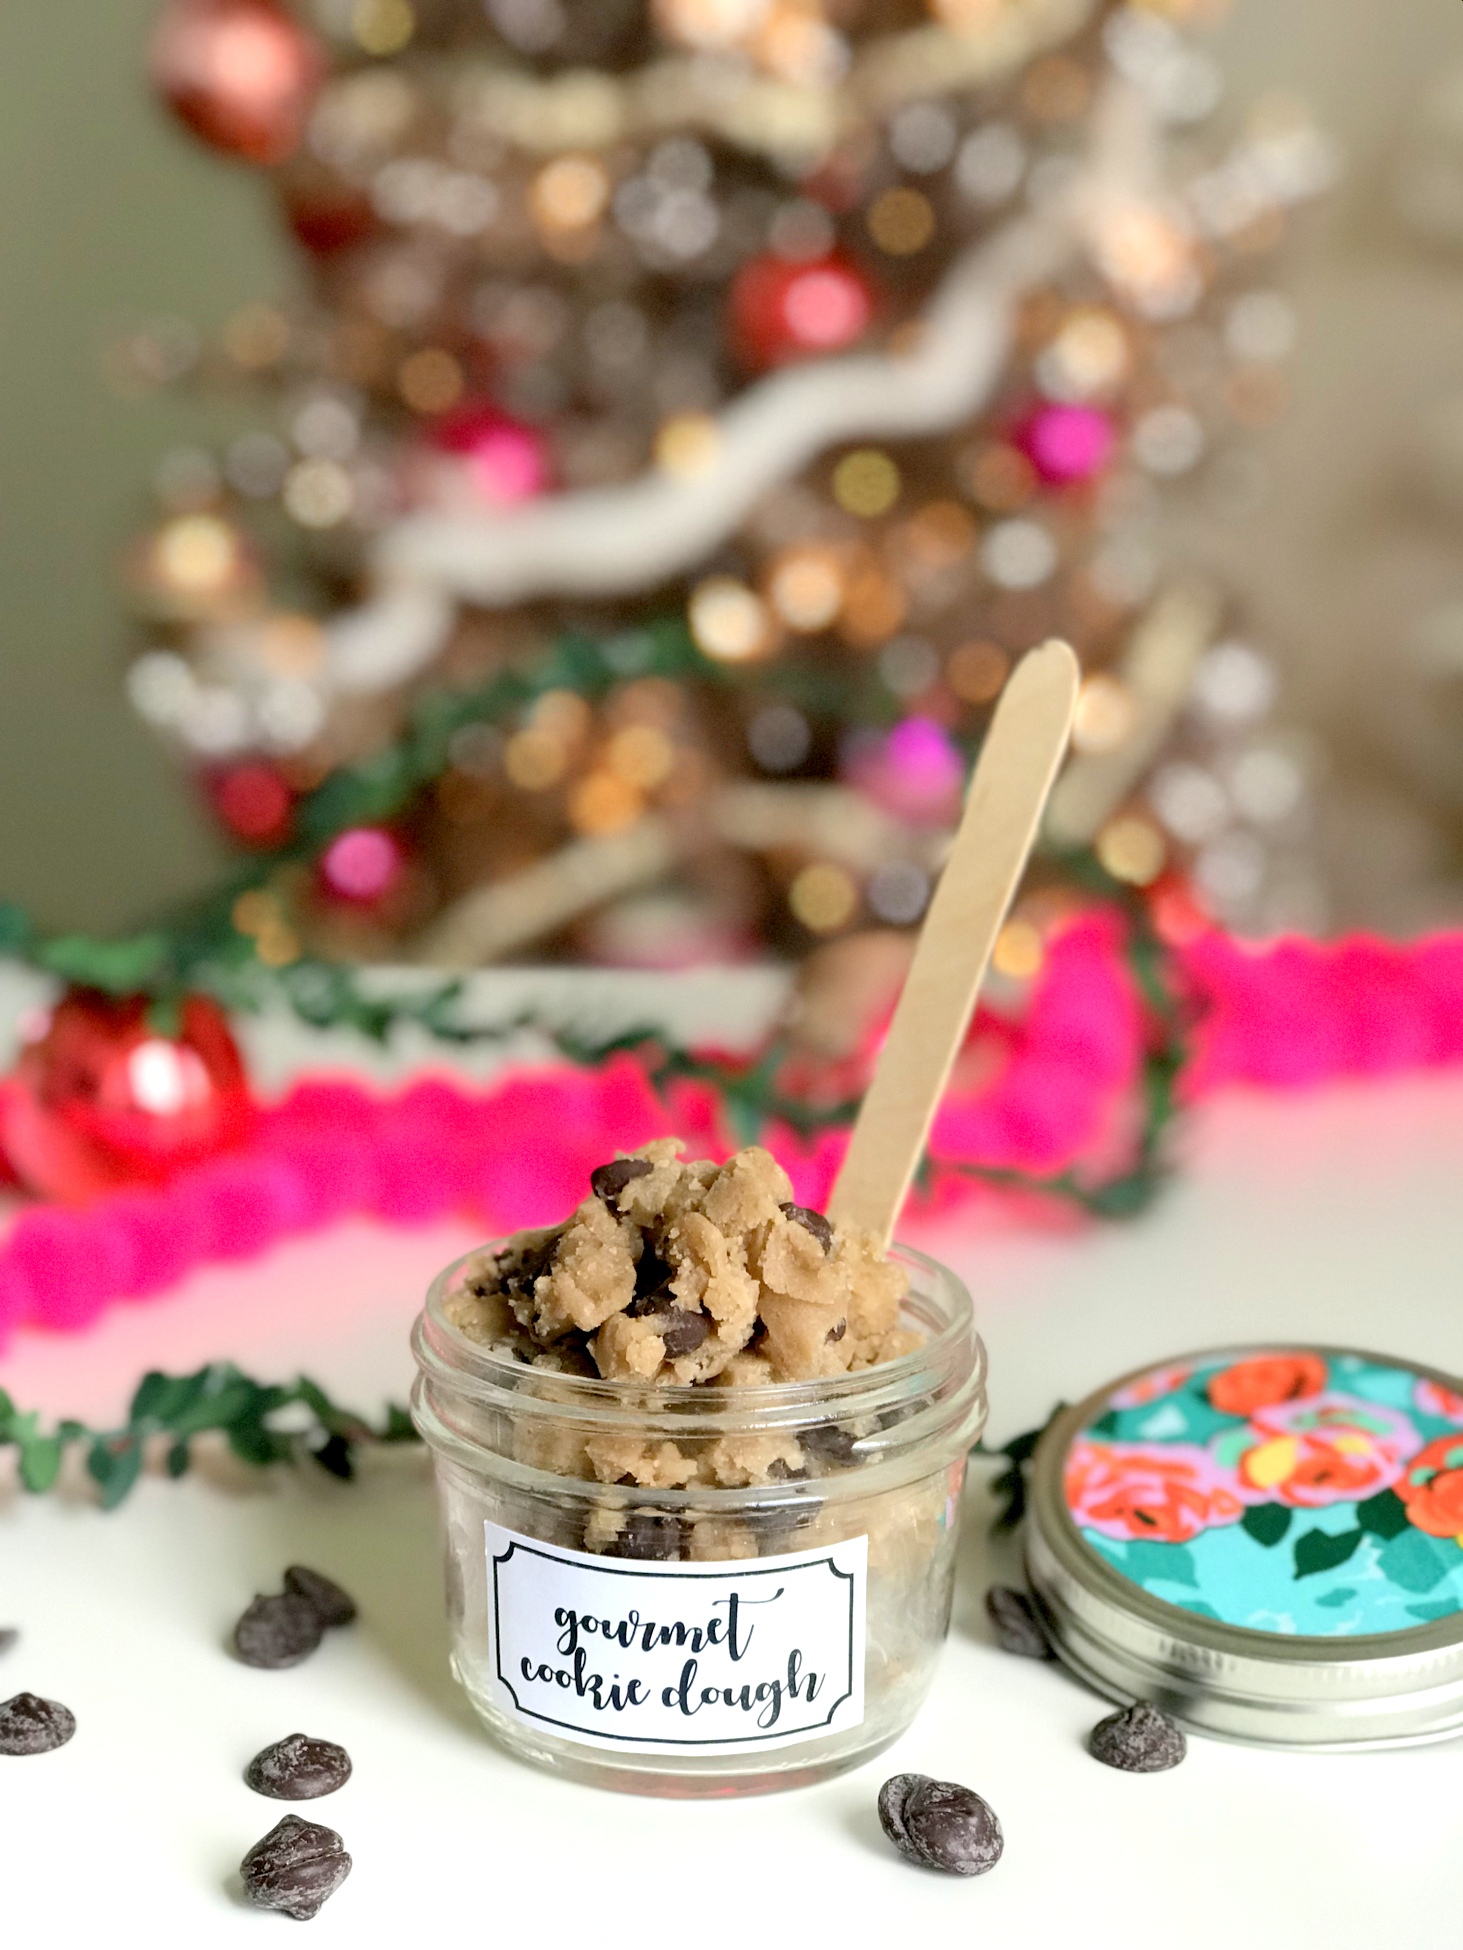 gourmet cookie dough recipe and edible Christmas gift ideas